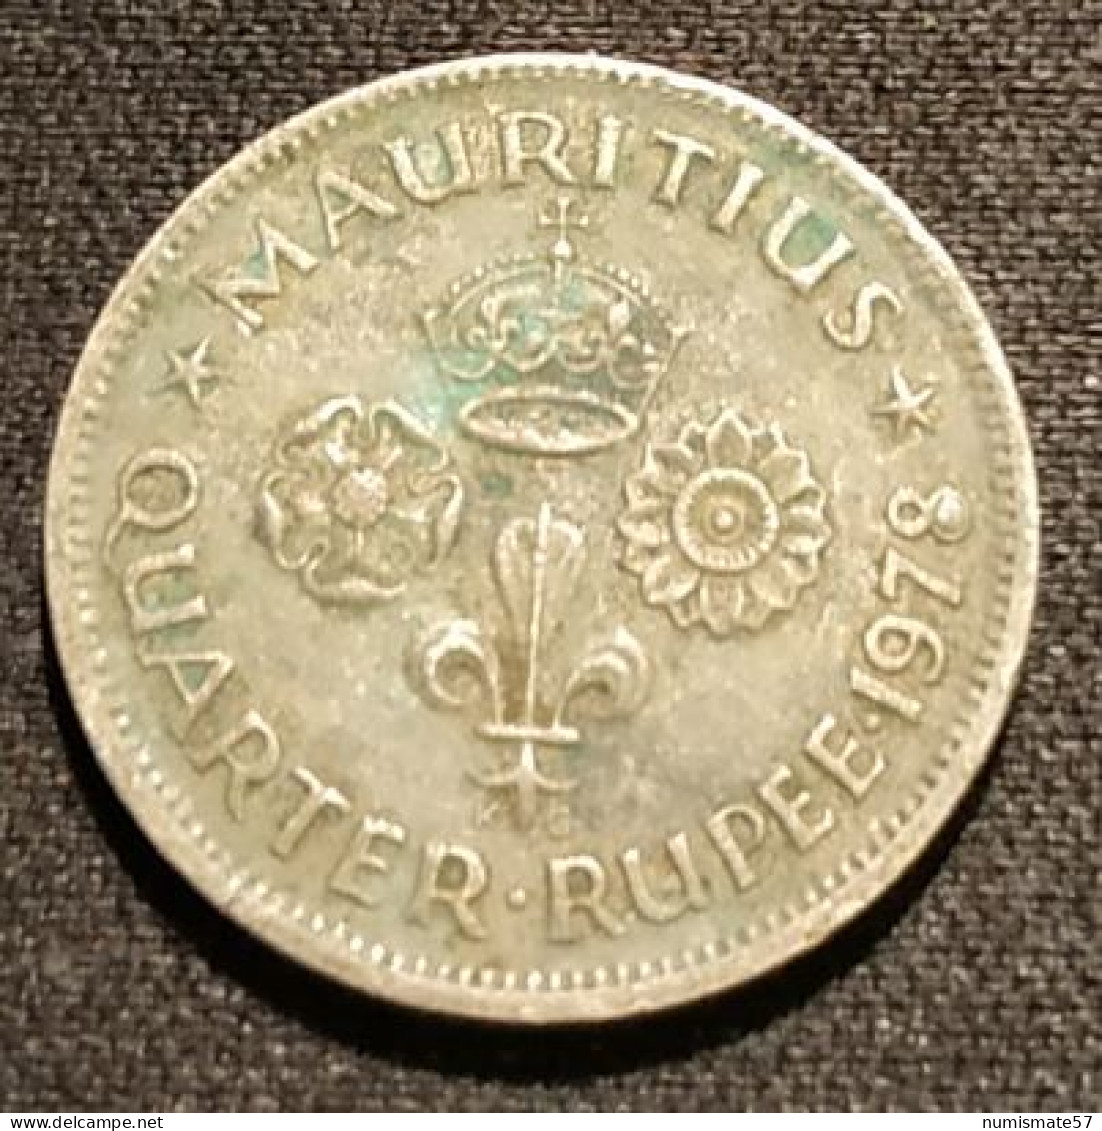 RARE - ILE MAURICE - ¼  - 1/4 ROUPIE - QUARTER RUPEE 1978 - Lower Hole In "8" Filled - KM 36 - MAURITIUS - Mauritius